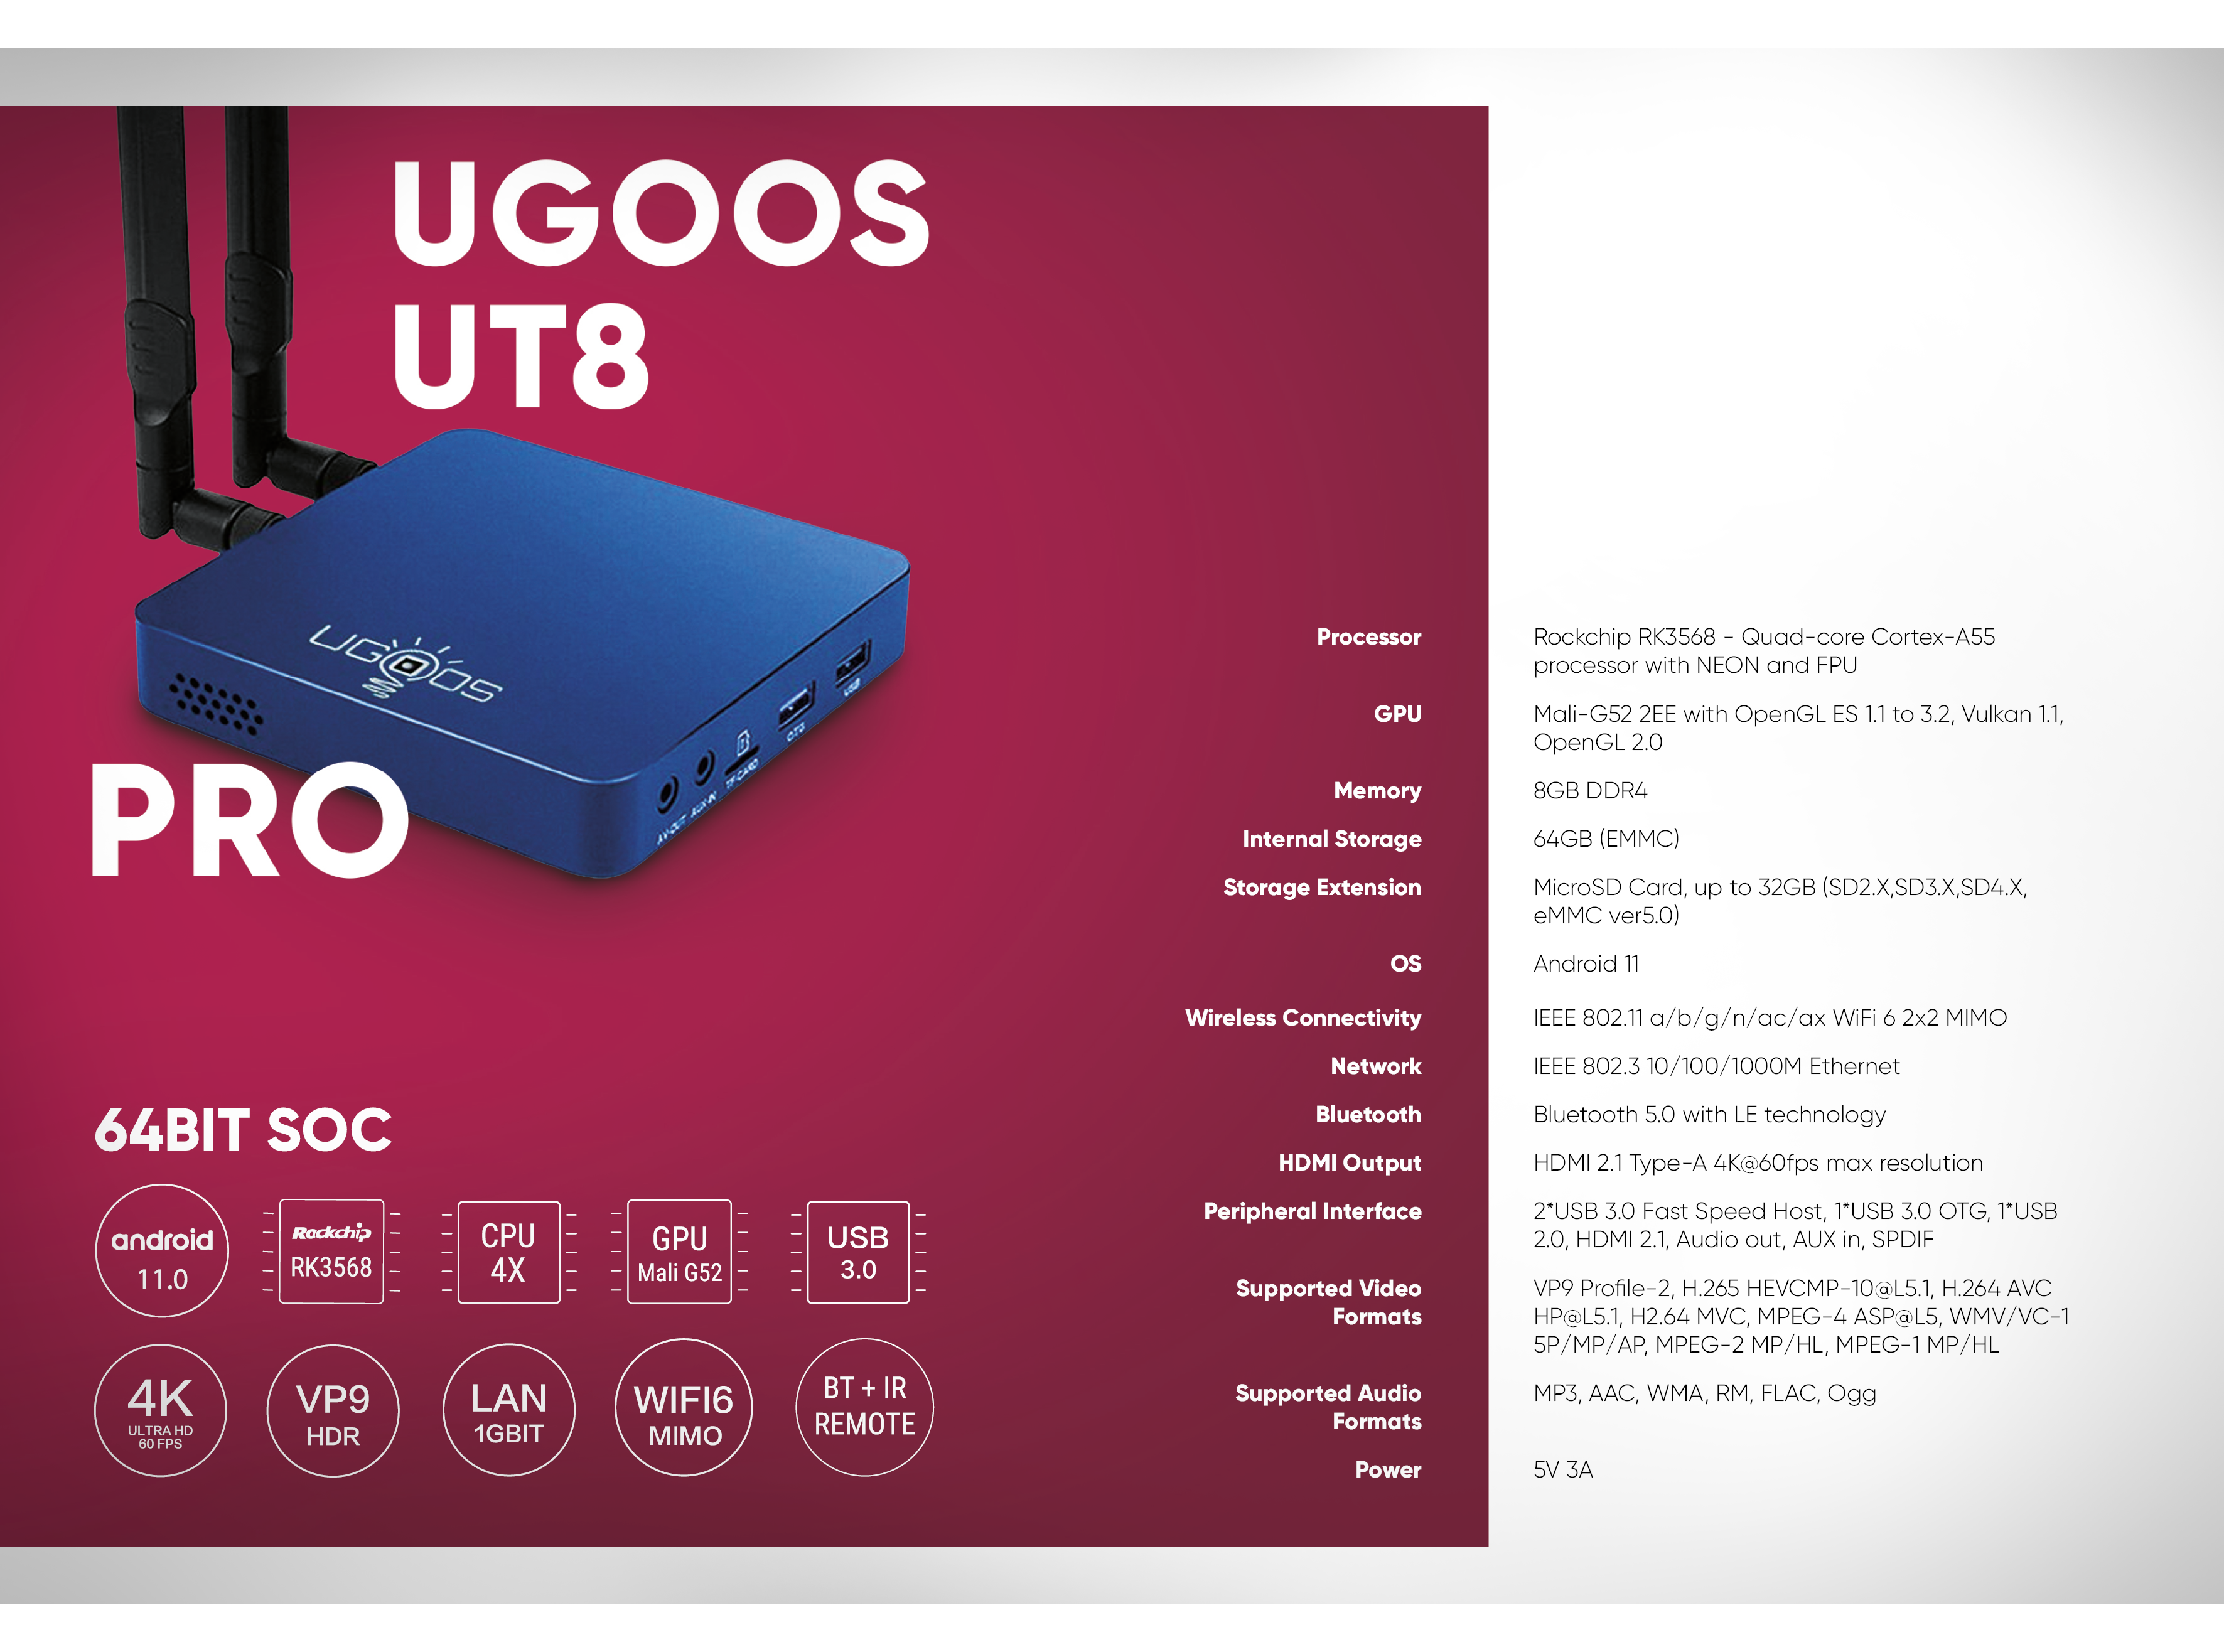 Ugoos UT8 Pro